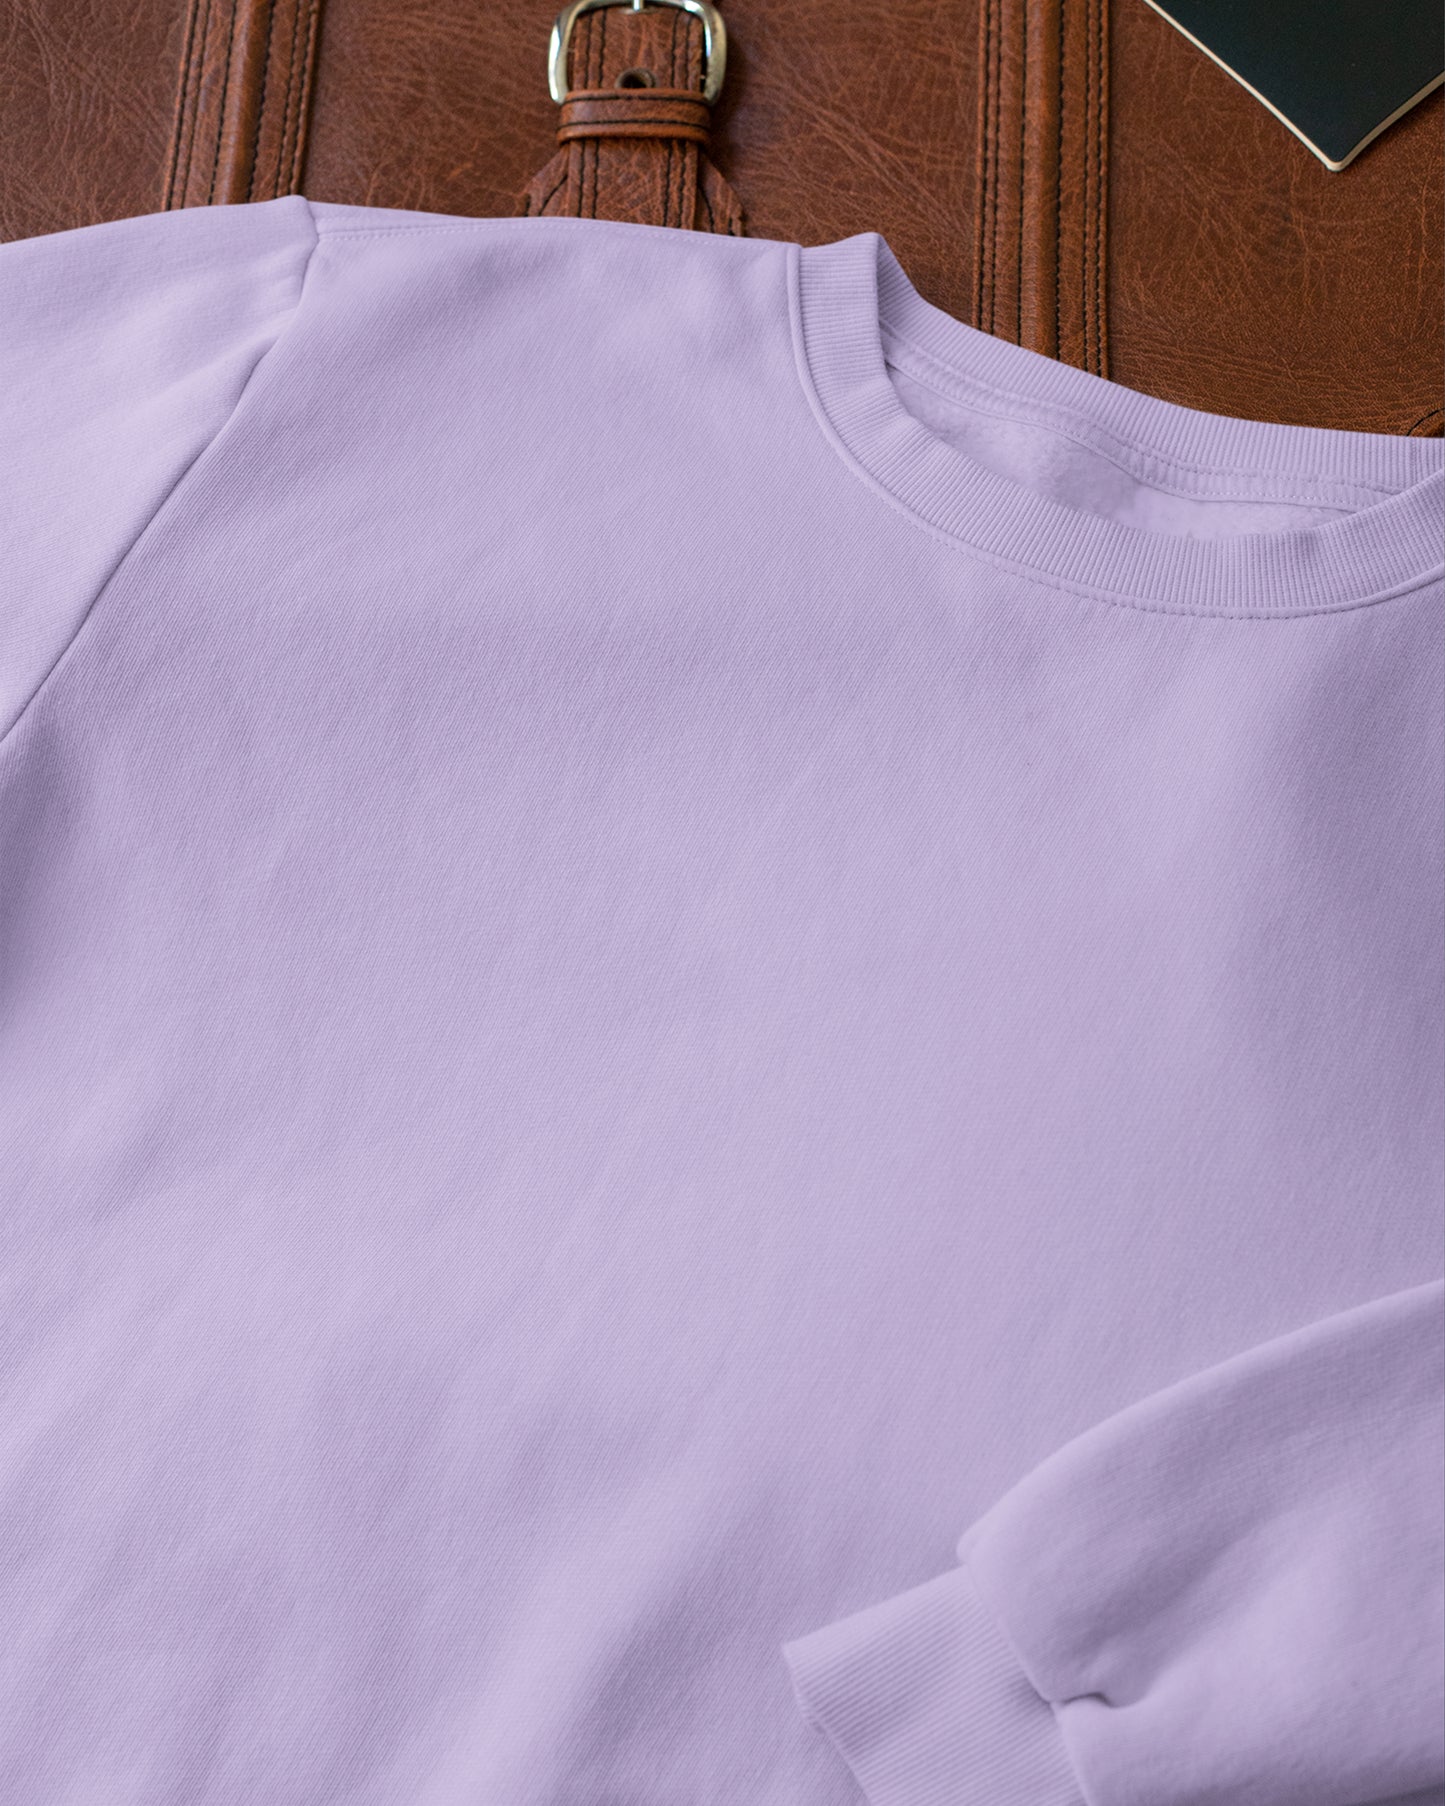 Iris lavender plain sweatshirt for men and women online - Muselot